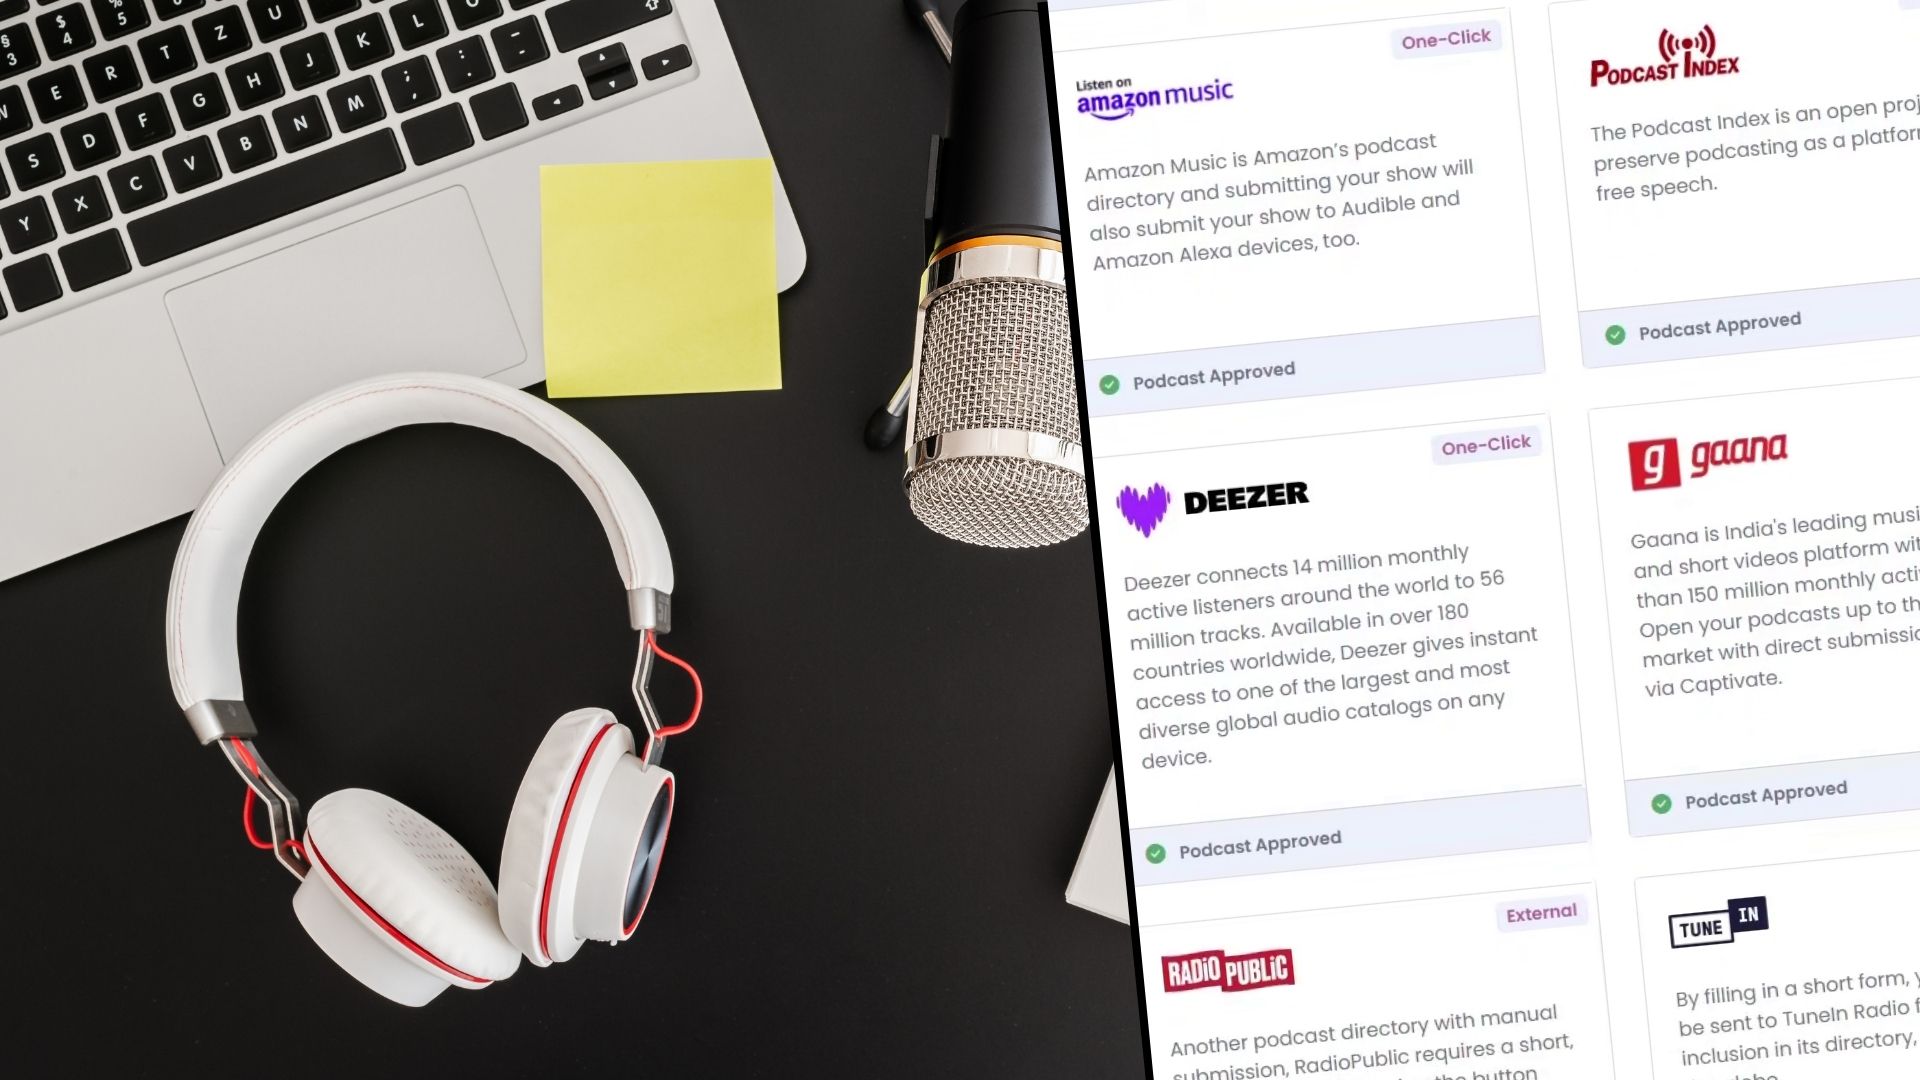 headphones, laptop, microphone, screenshot of podcast hosting site